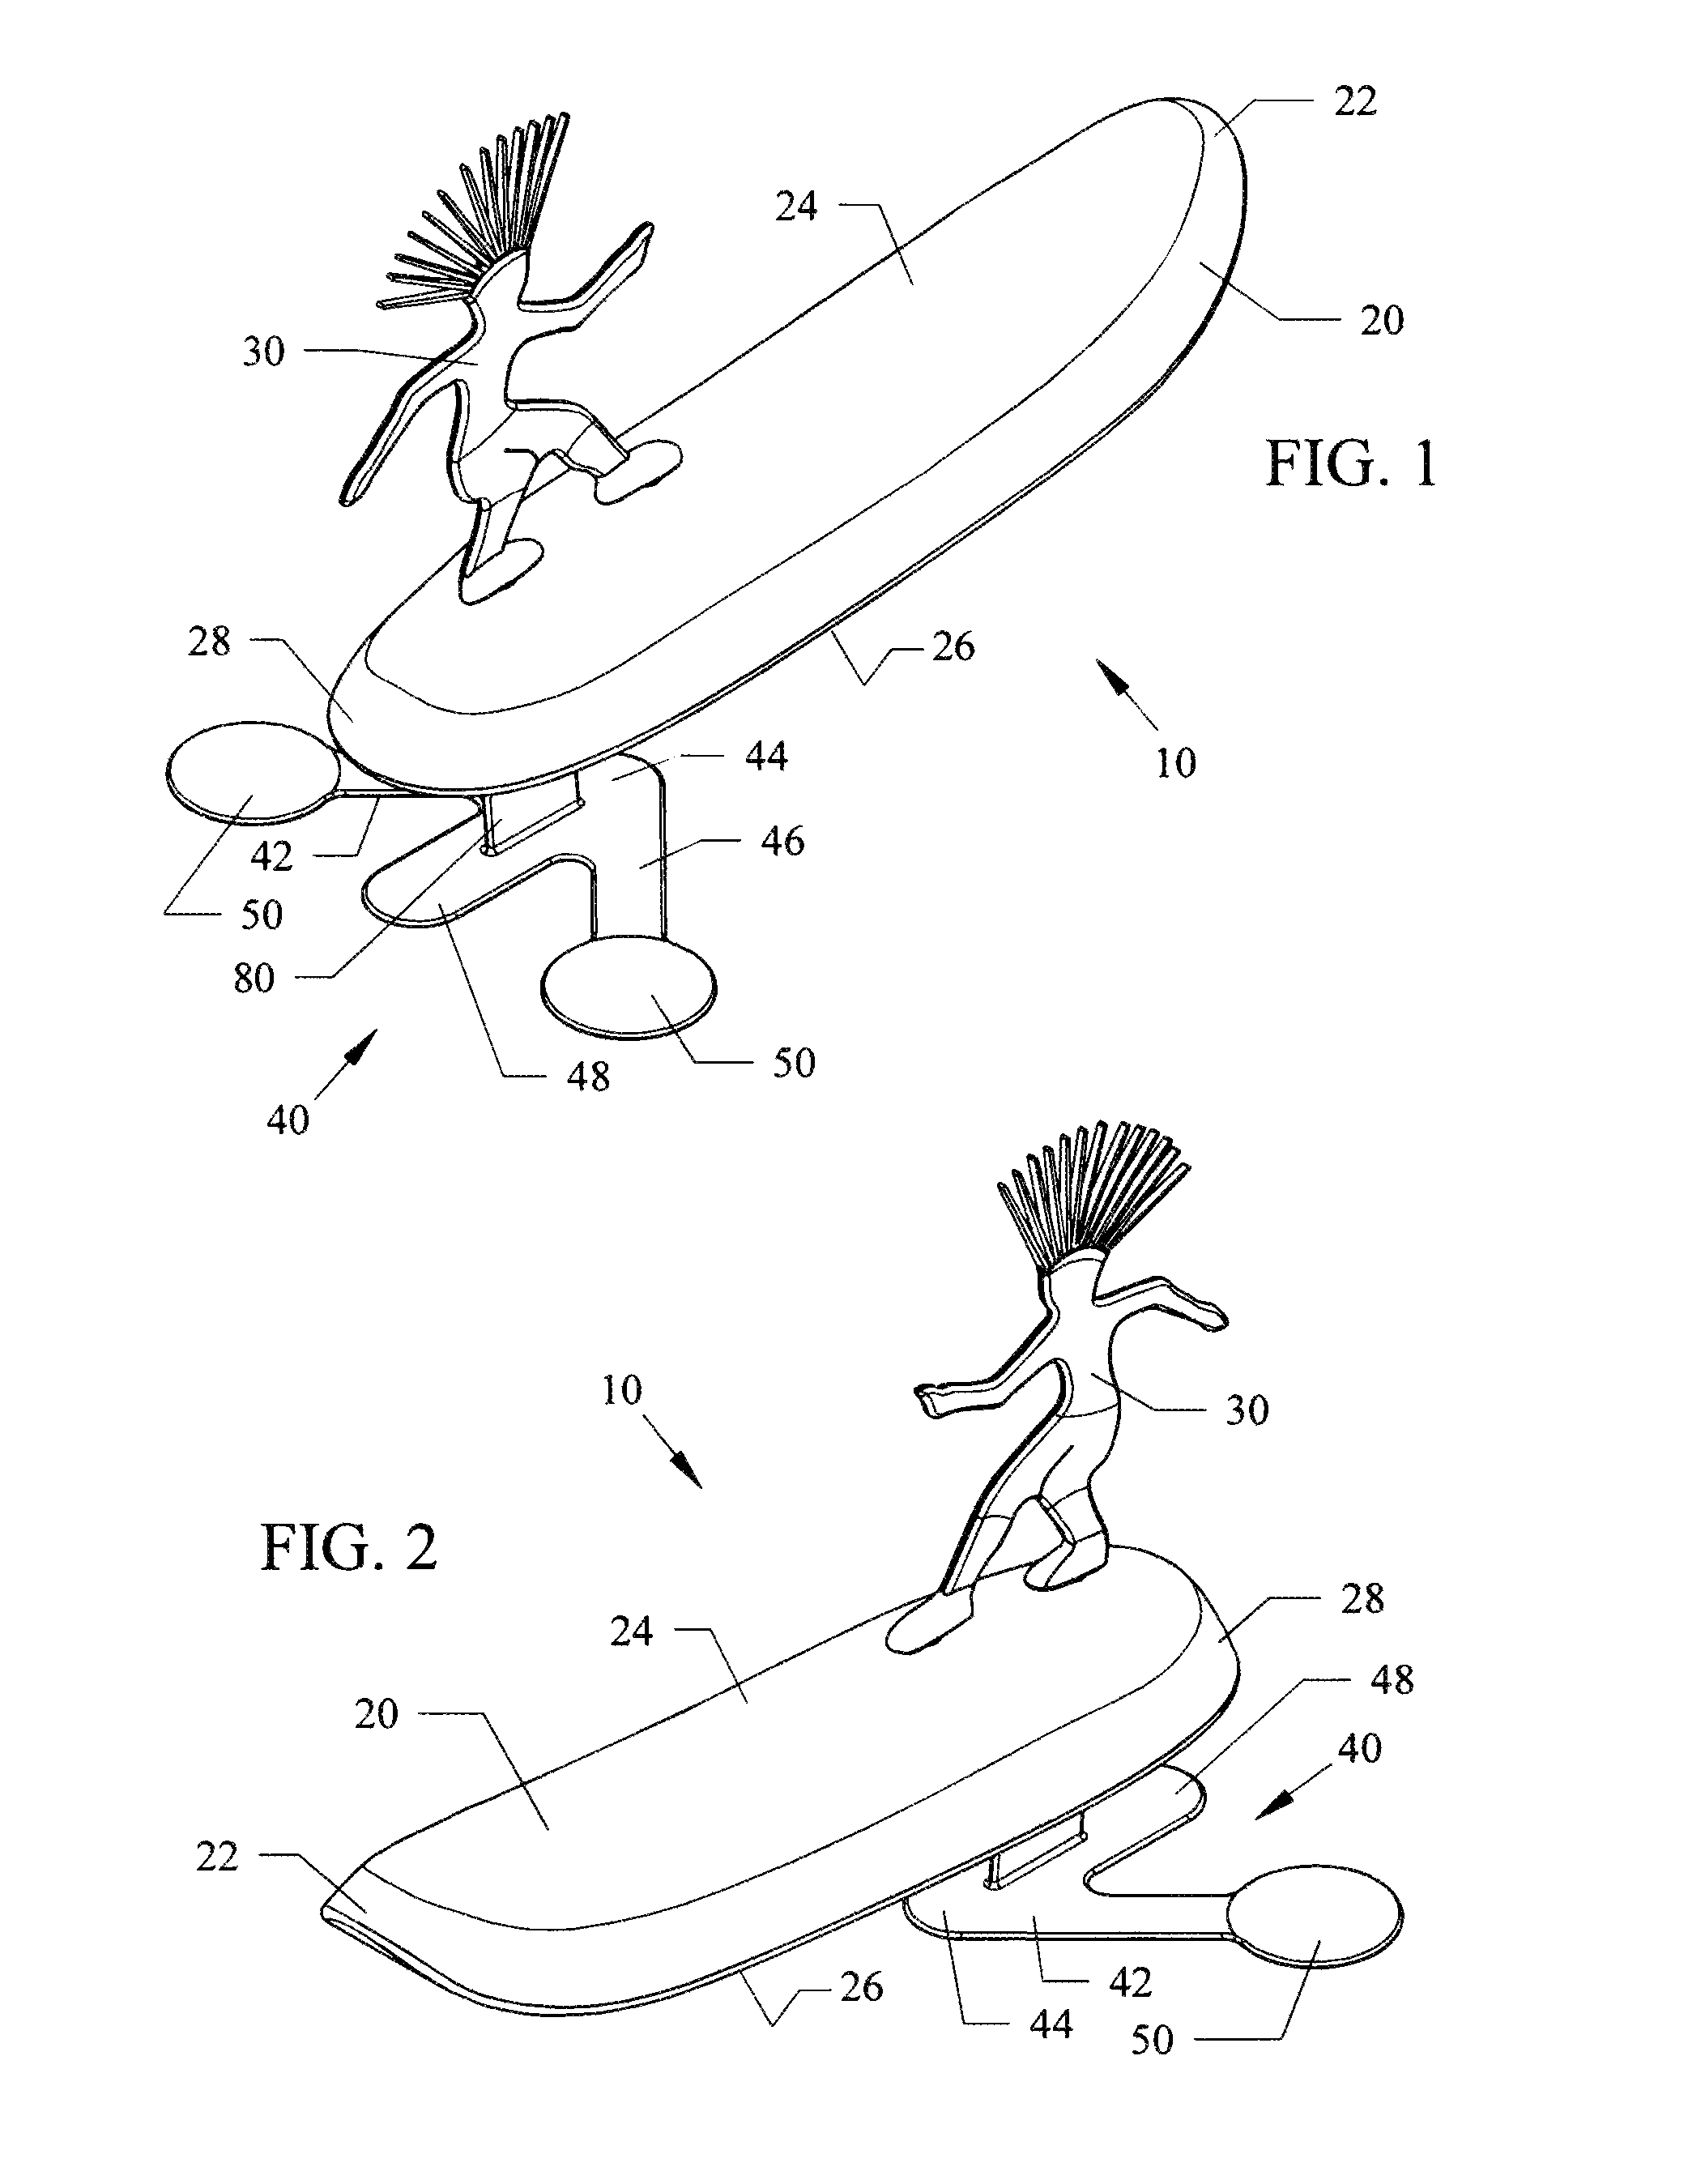 Toy surfboard